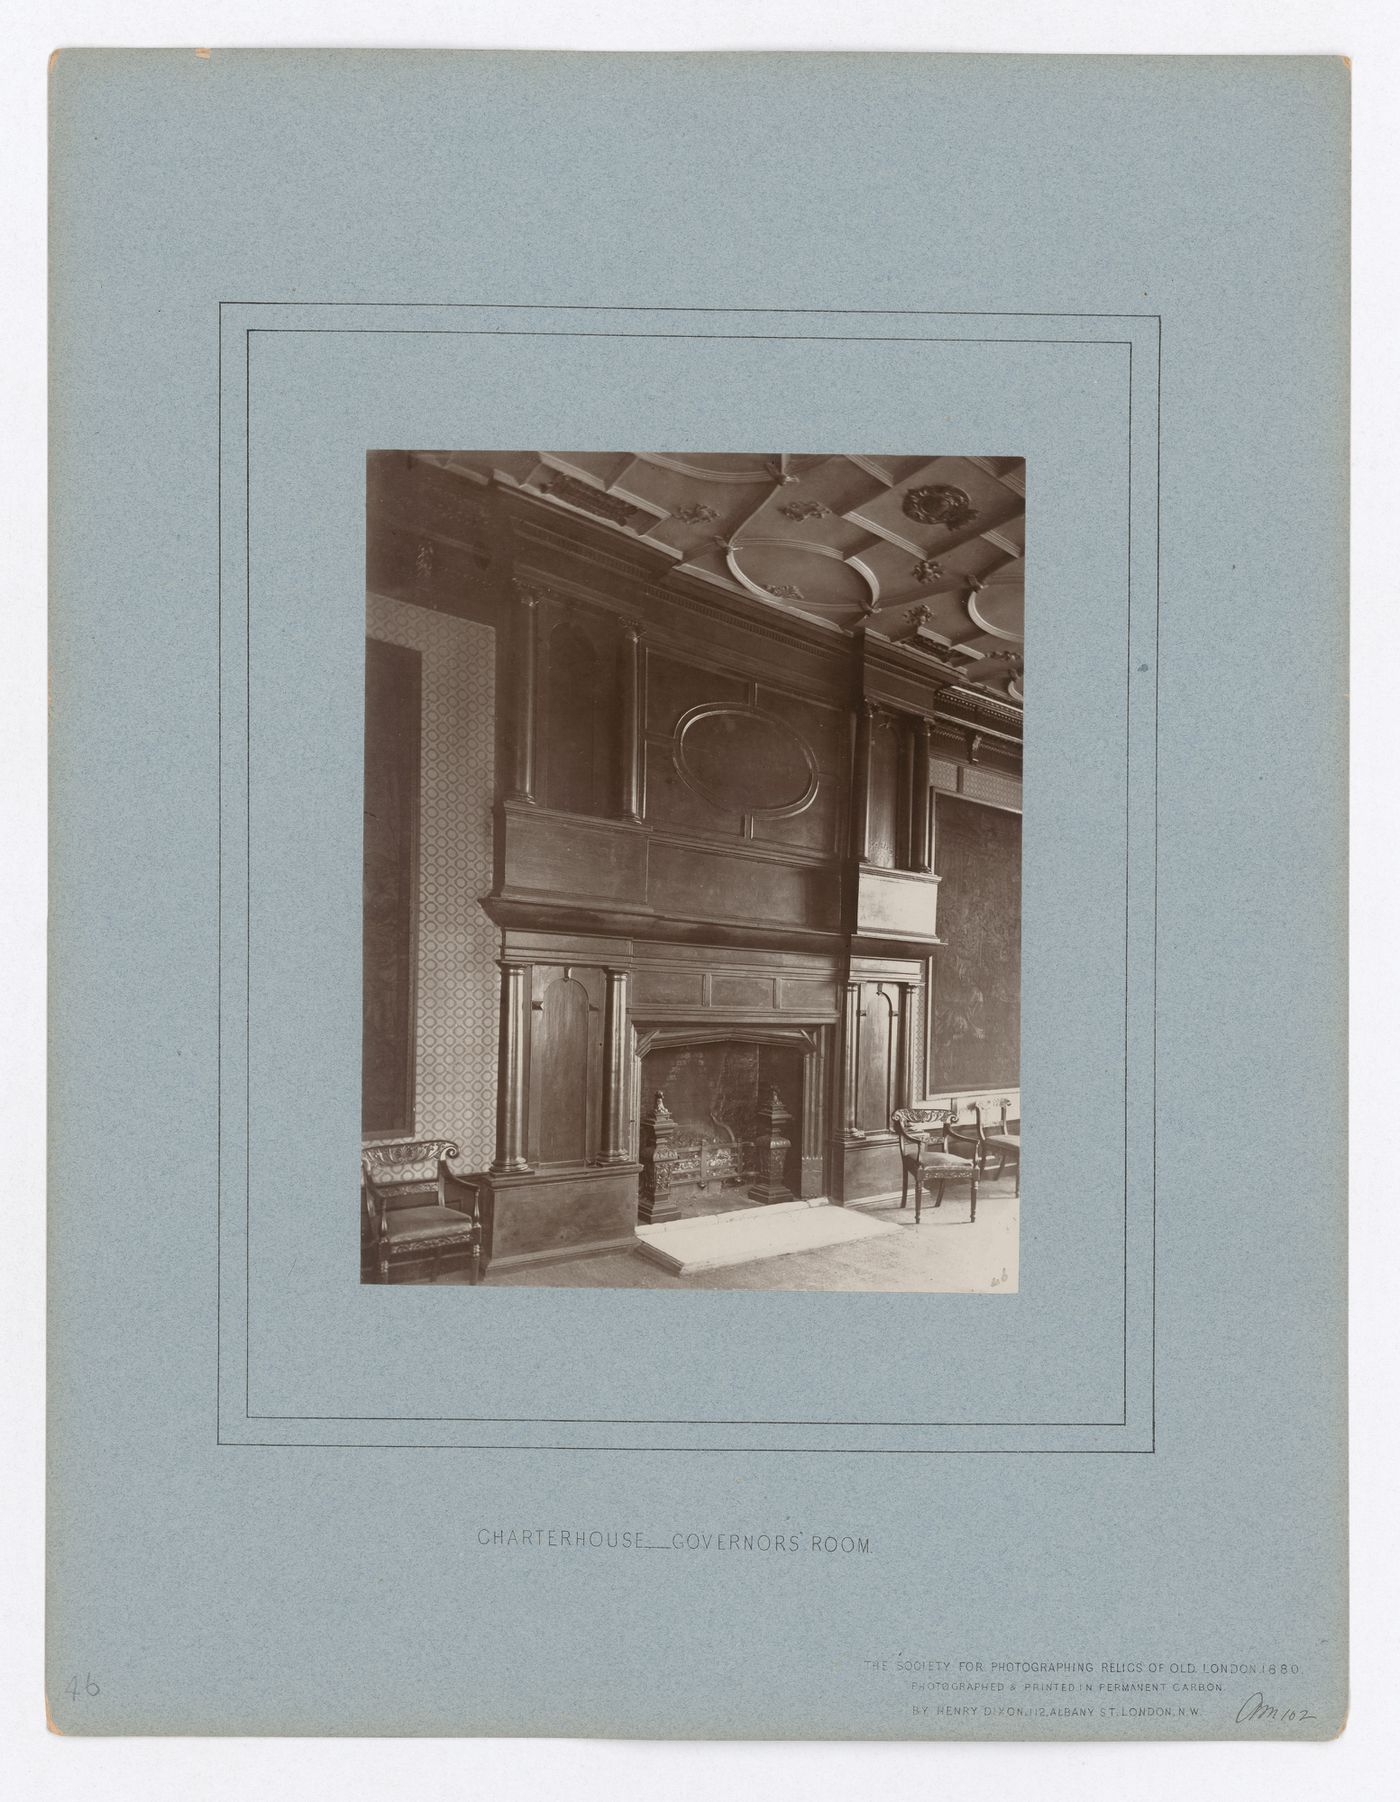 Charterhouse Governor's Room